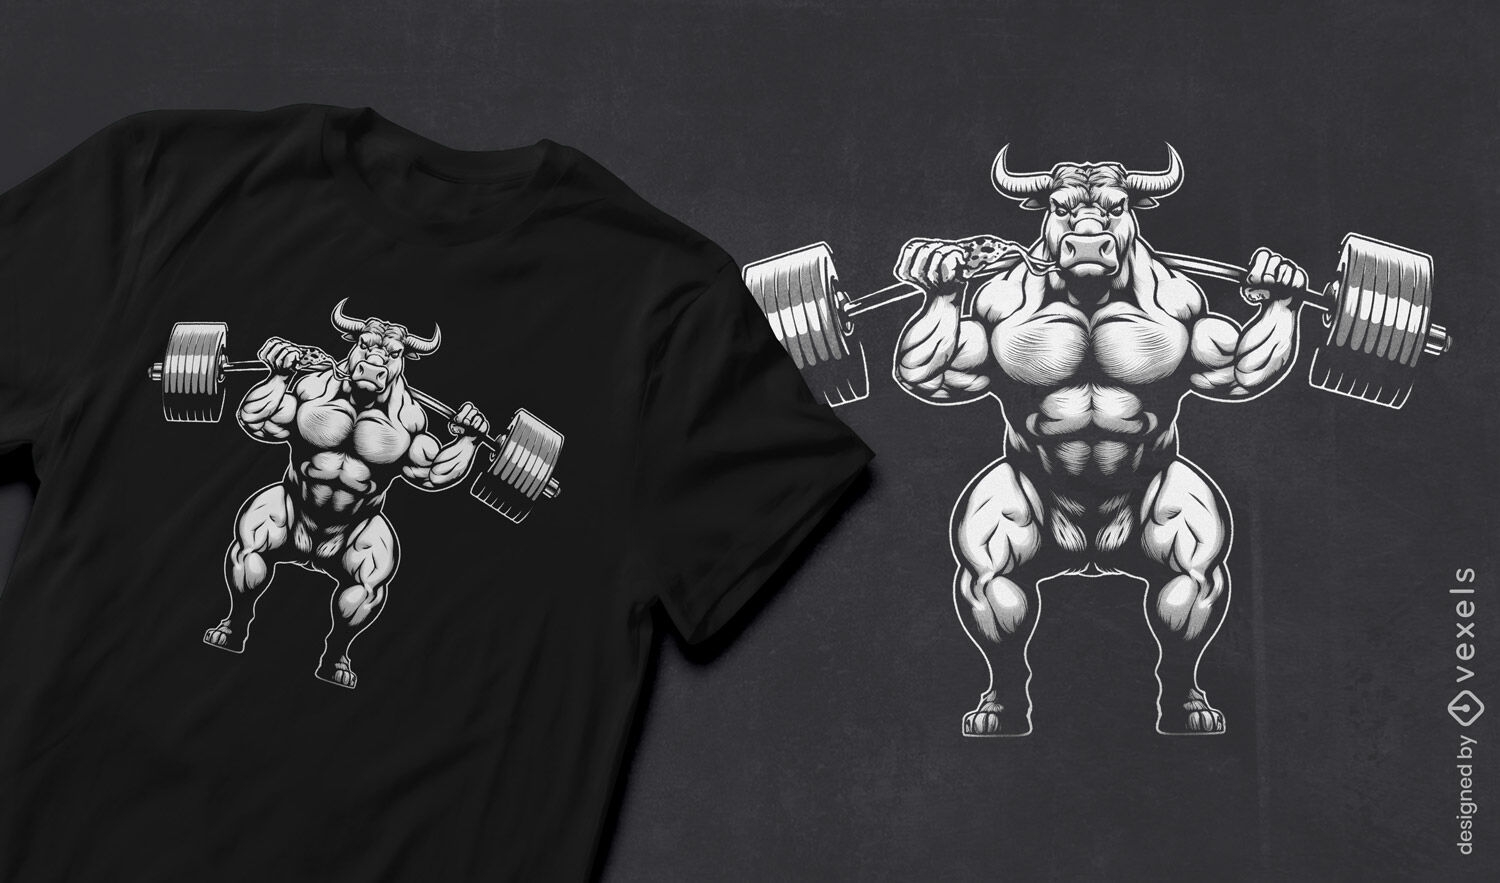 Comical muscular cow t-shirt design